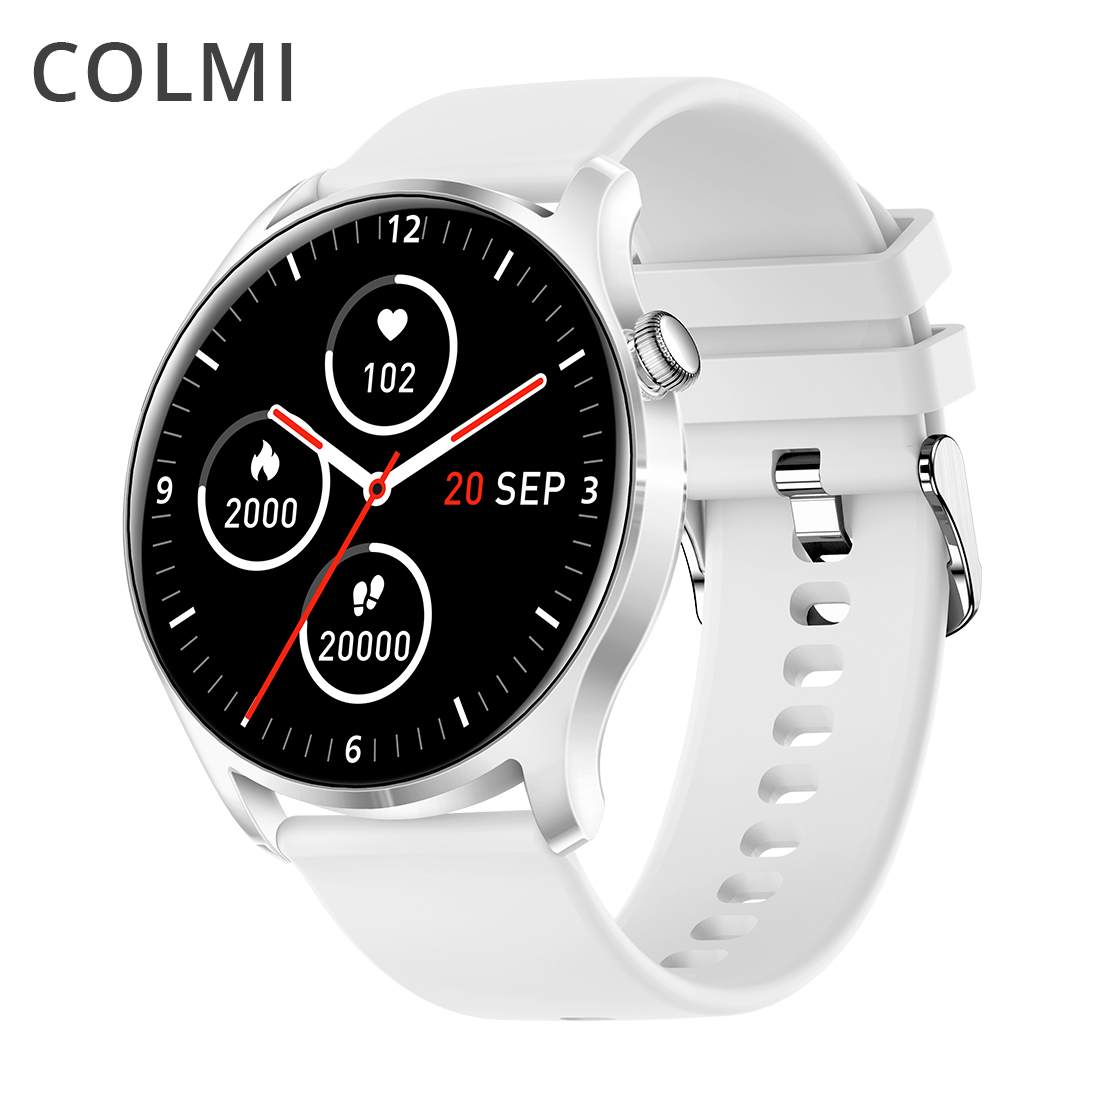 COLMI SKY 8 Mná Faire Cliste IP67 Fir Smartwatch uiscedhíonach Bluetooth Do Android i (7)